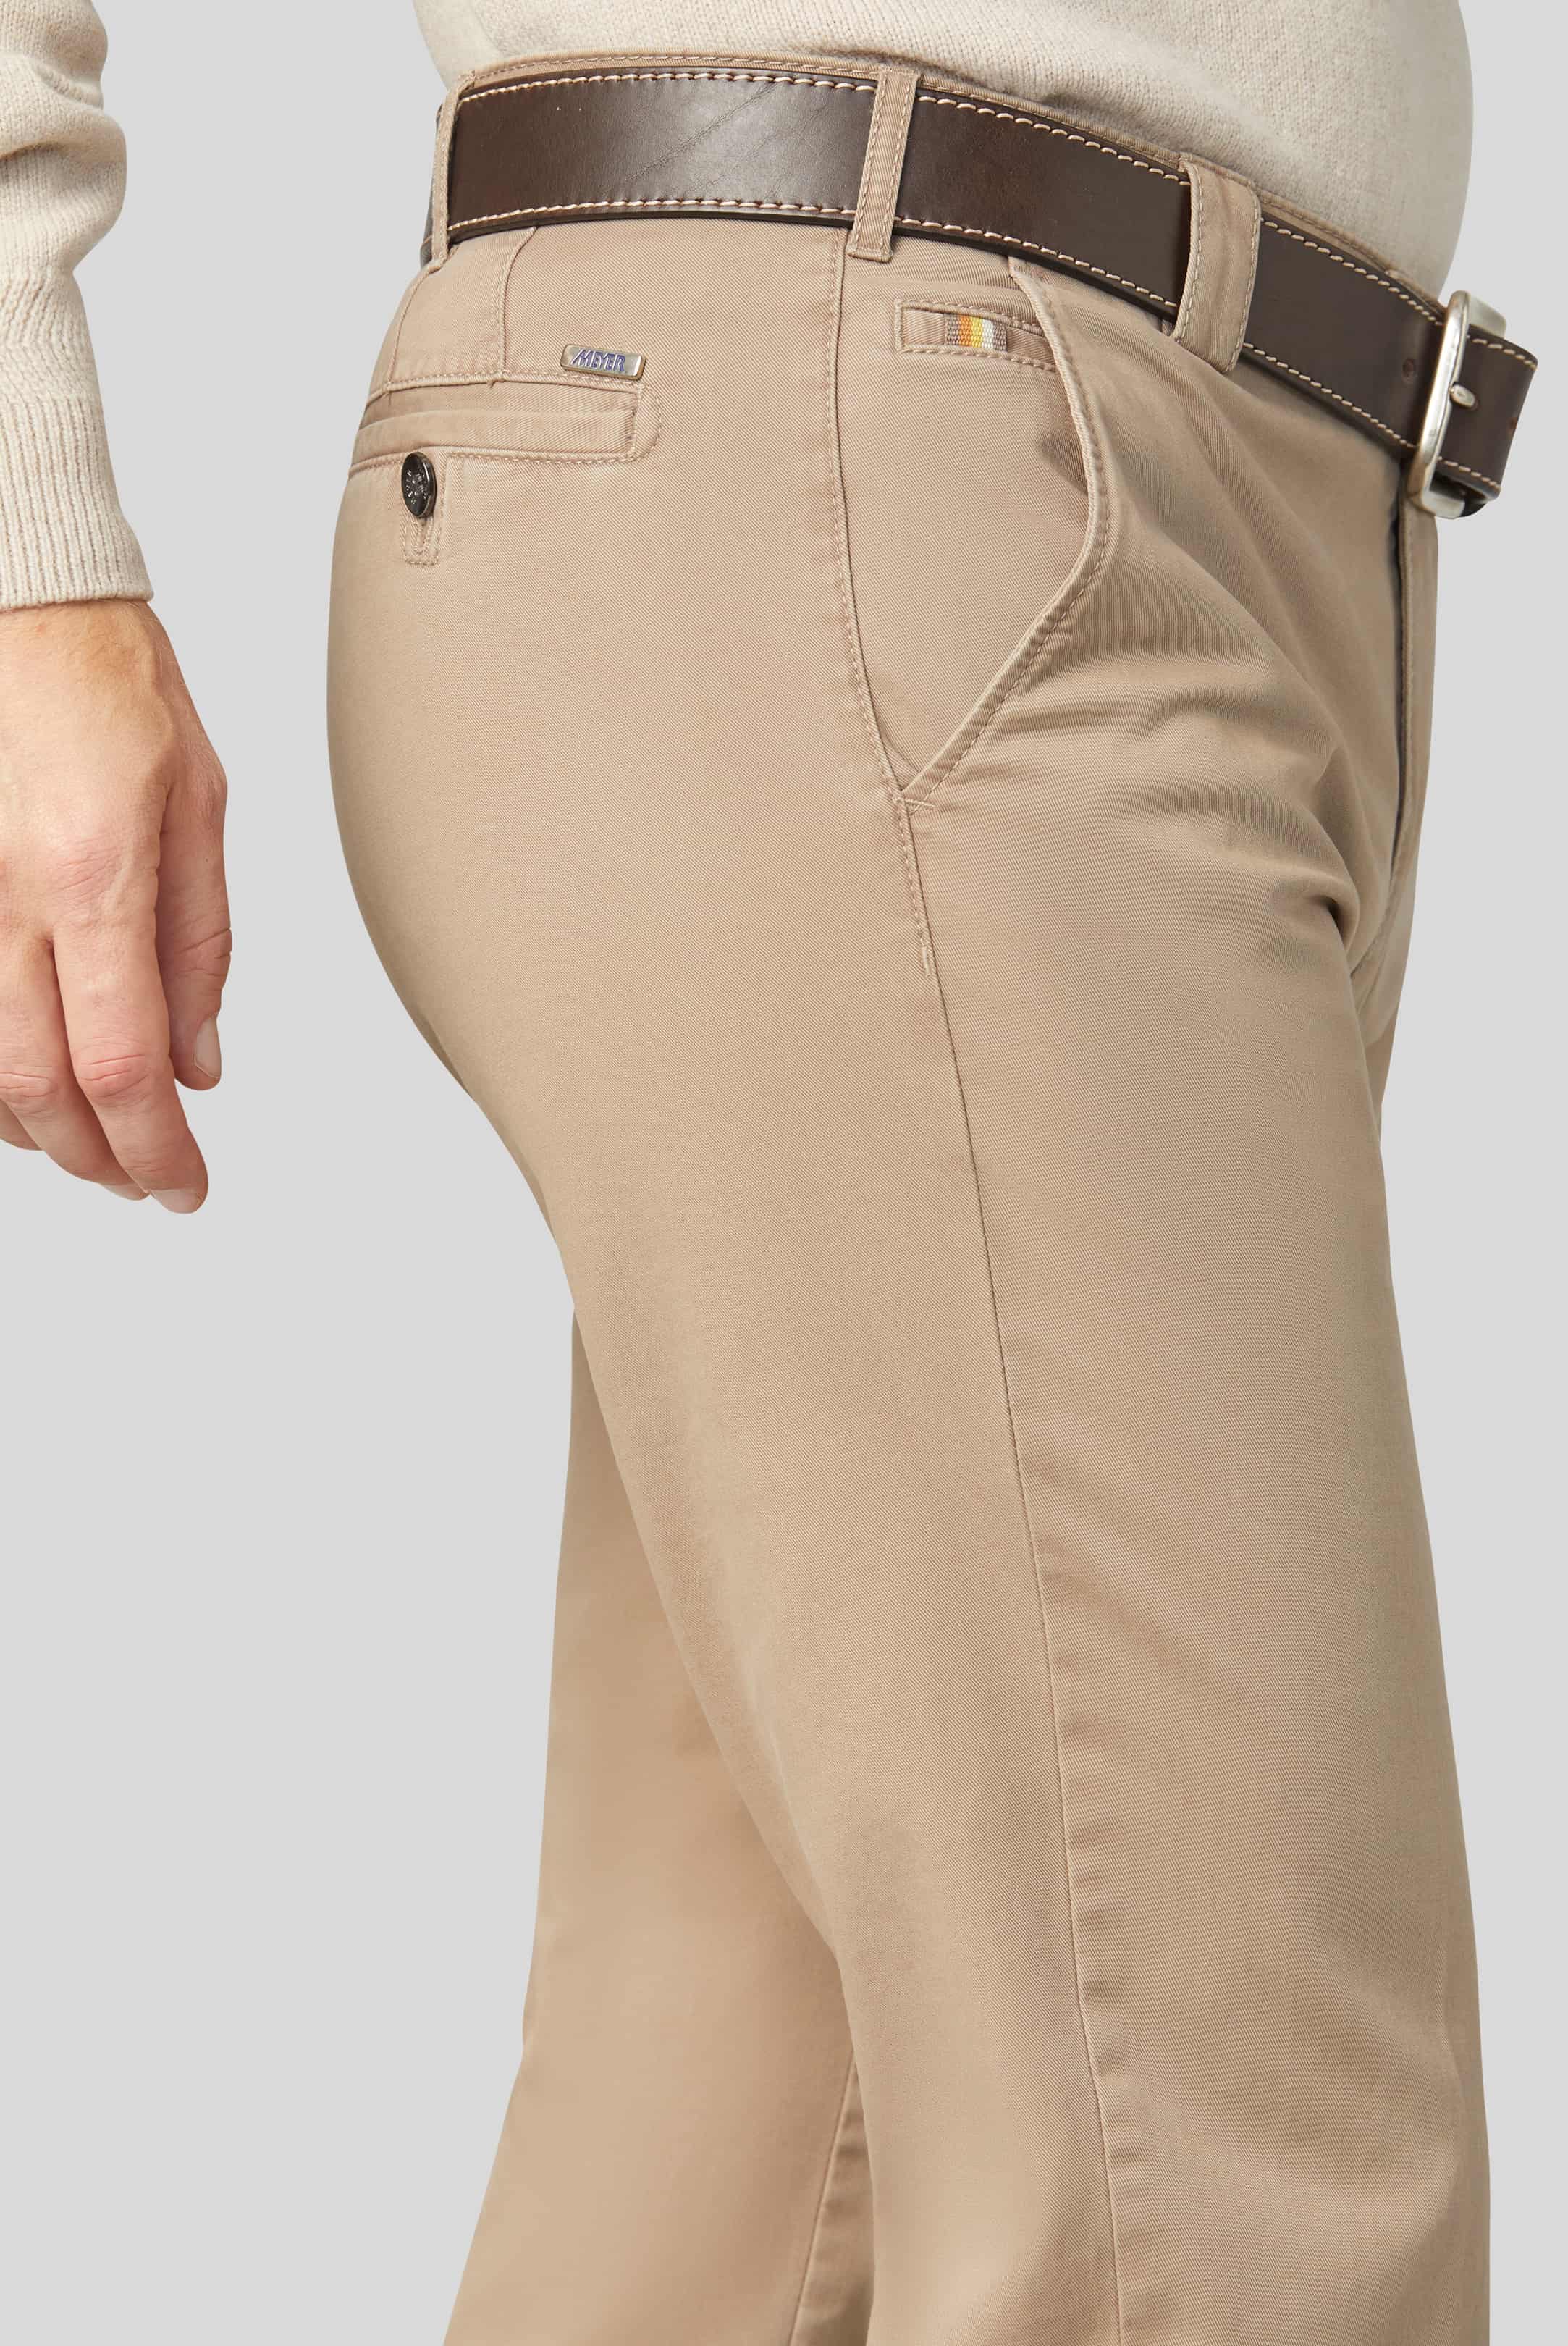 DENGDENG Mens Golf Pants Relaxed Fit Straight-Leg Pants Cotton Linen Solid  Color Workout Pants for Men Long Casual Trousers Yellow S - Walmart.com